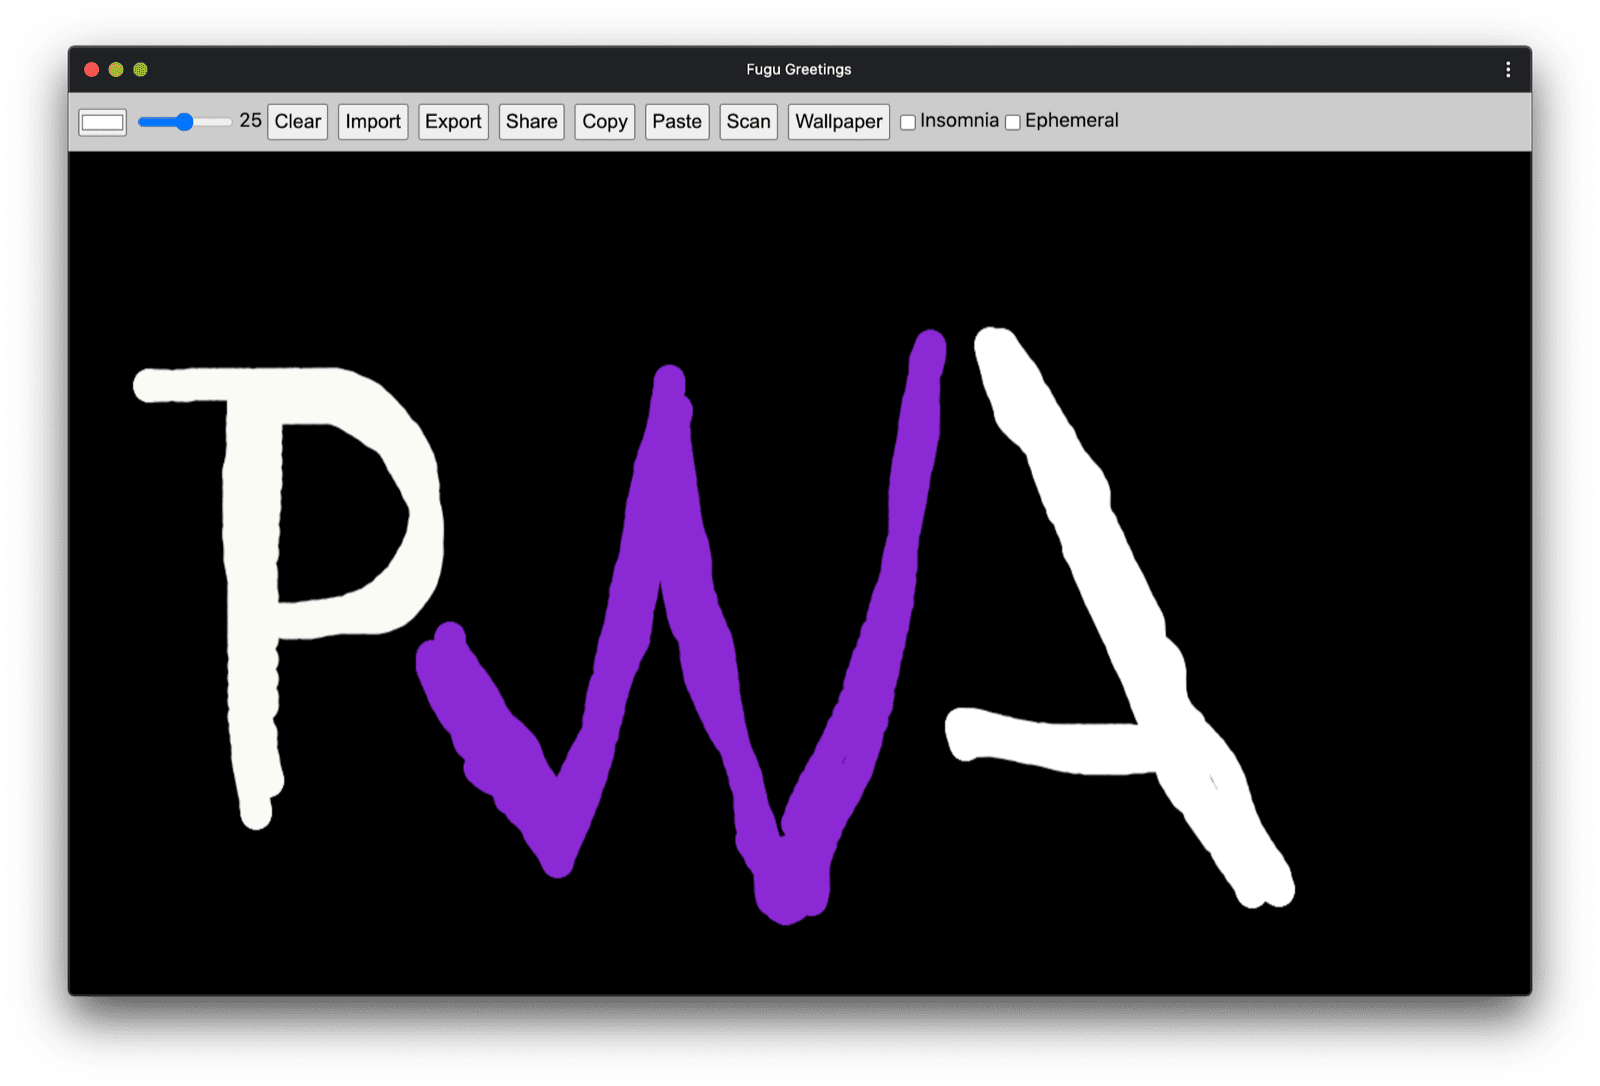 Fugu salue la PWA avec un dessin ressemblant au logo de la communauté des PWA.